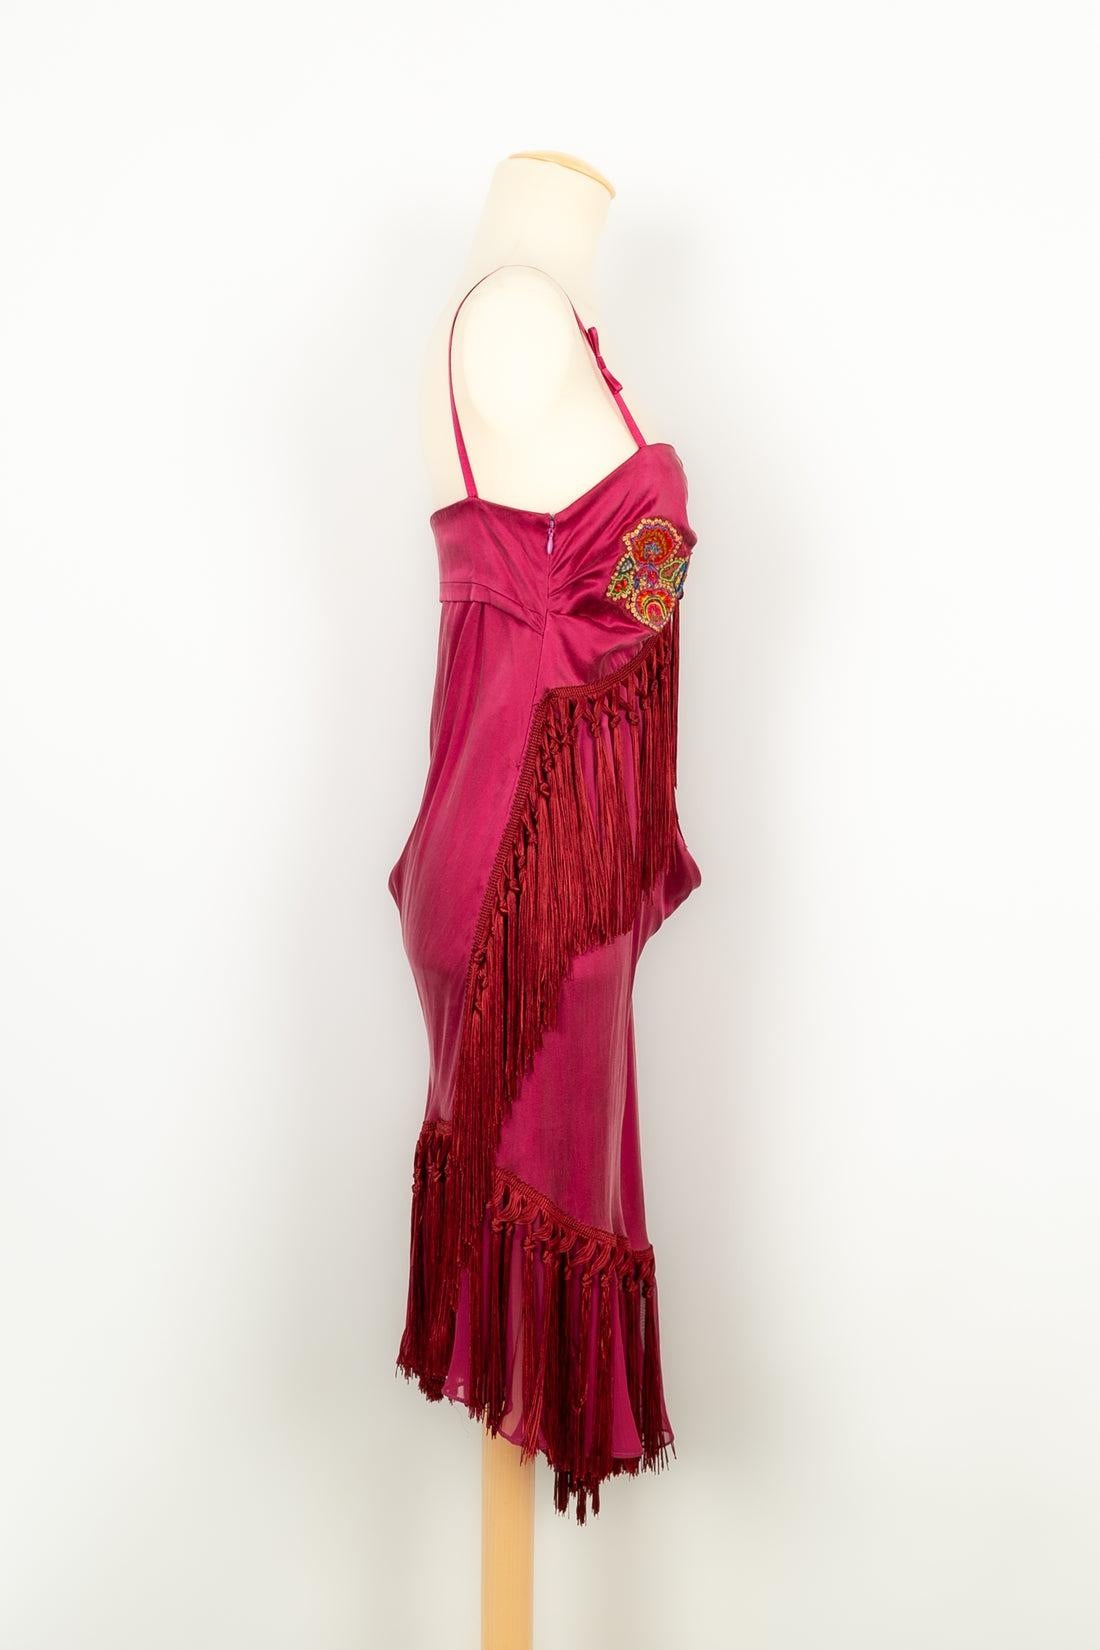 Women's John Galliano Dress in Pink Silk, 2000s